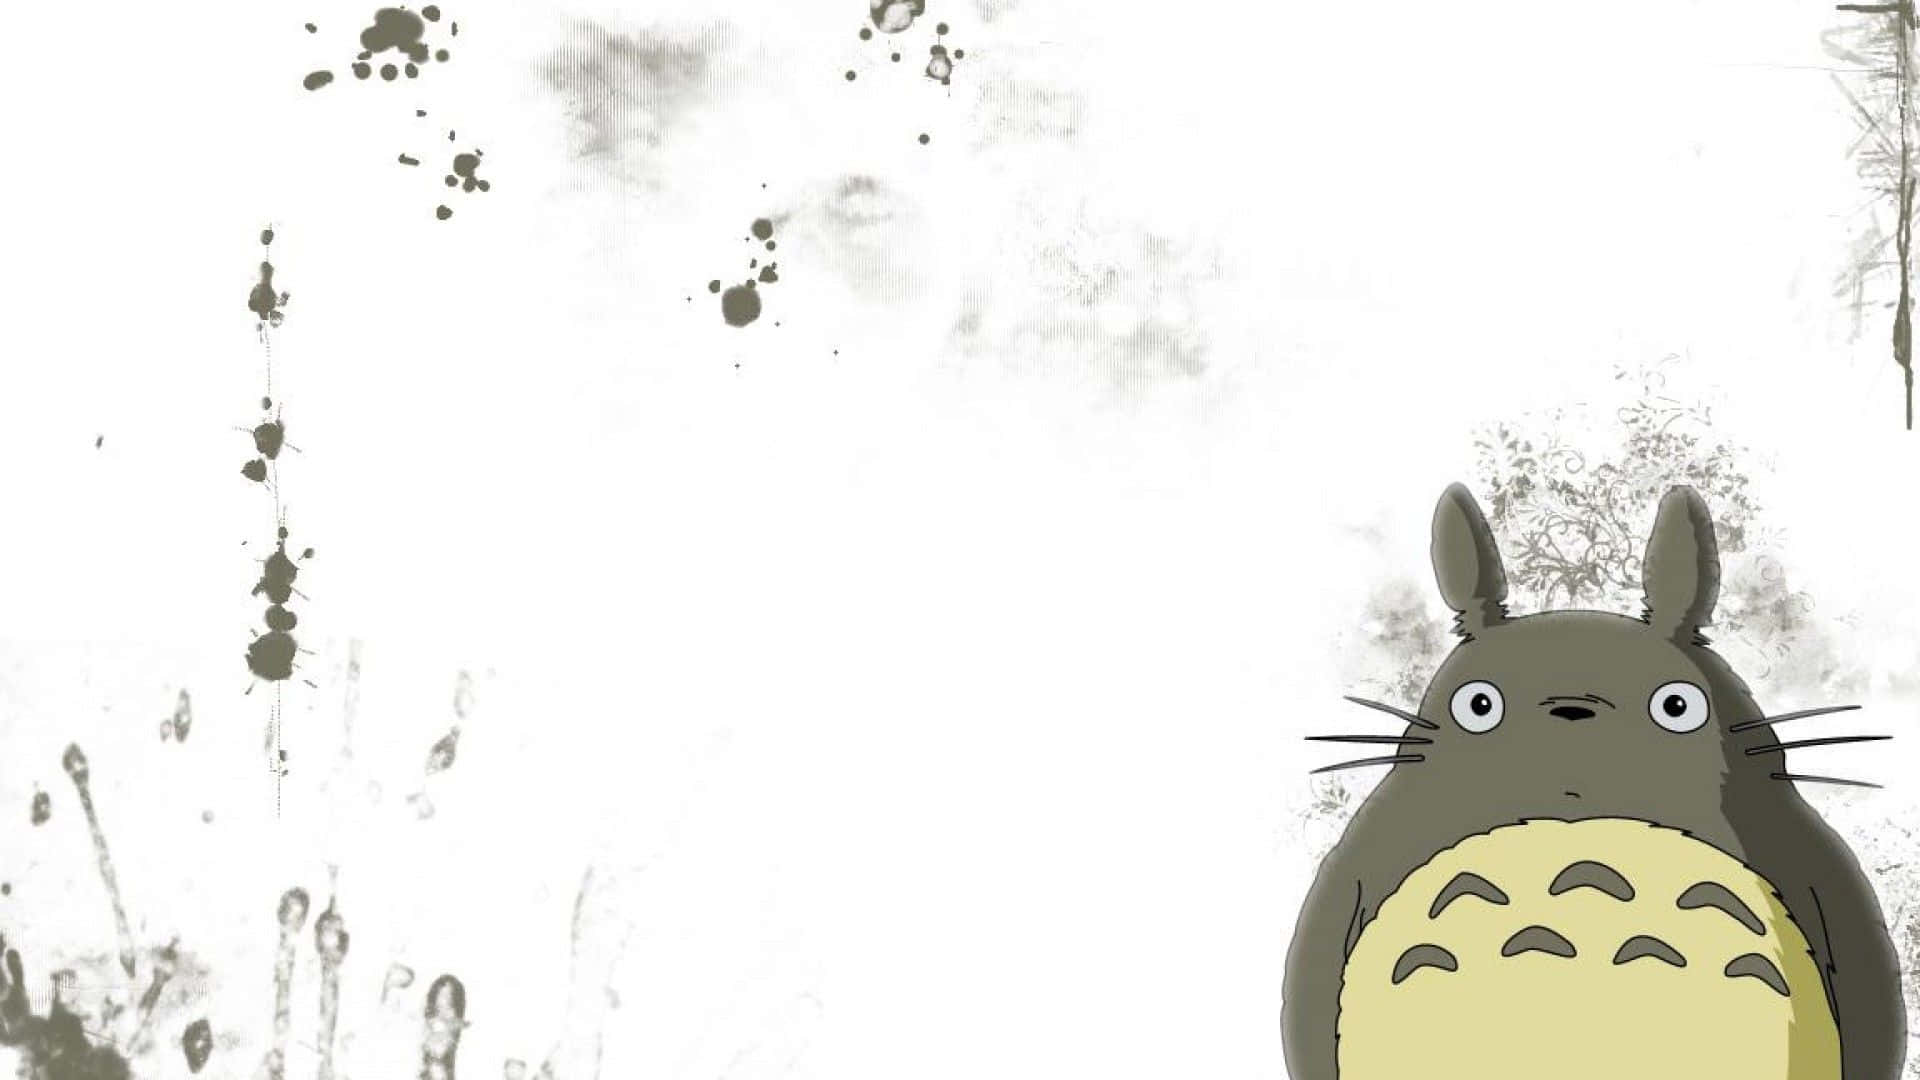 Explore the world of Totoro